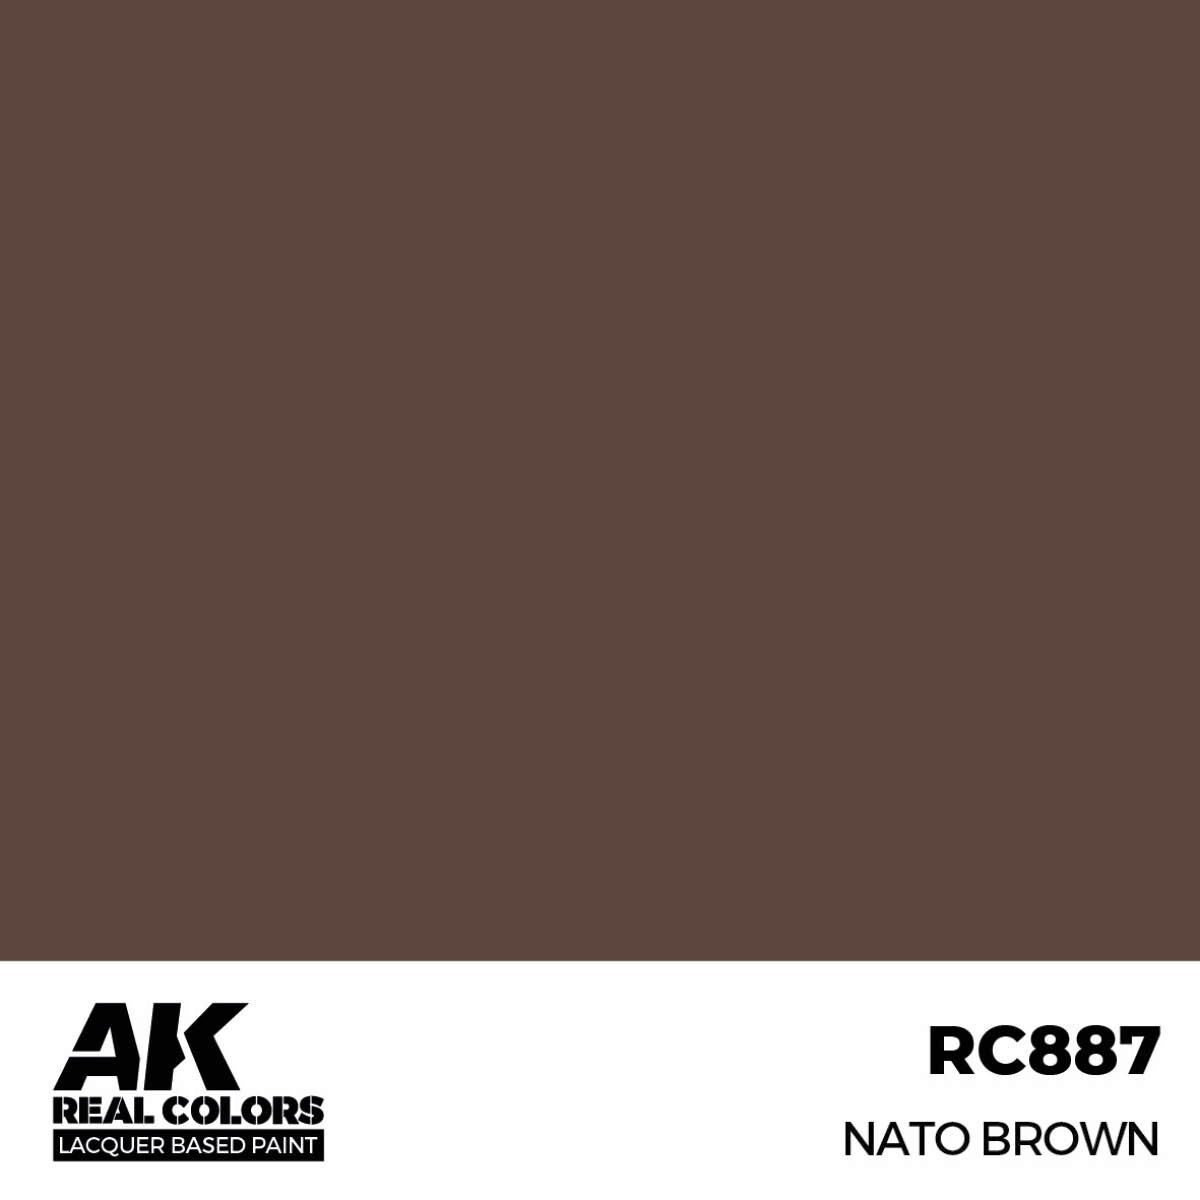 AK RC887 Real Colors NATO Brown 17 ml.